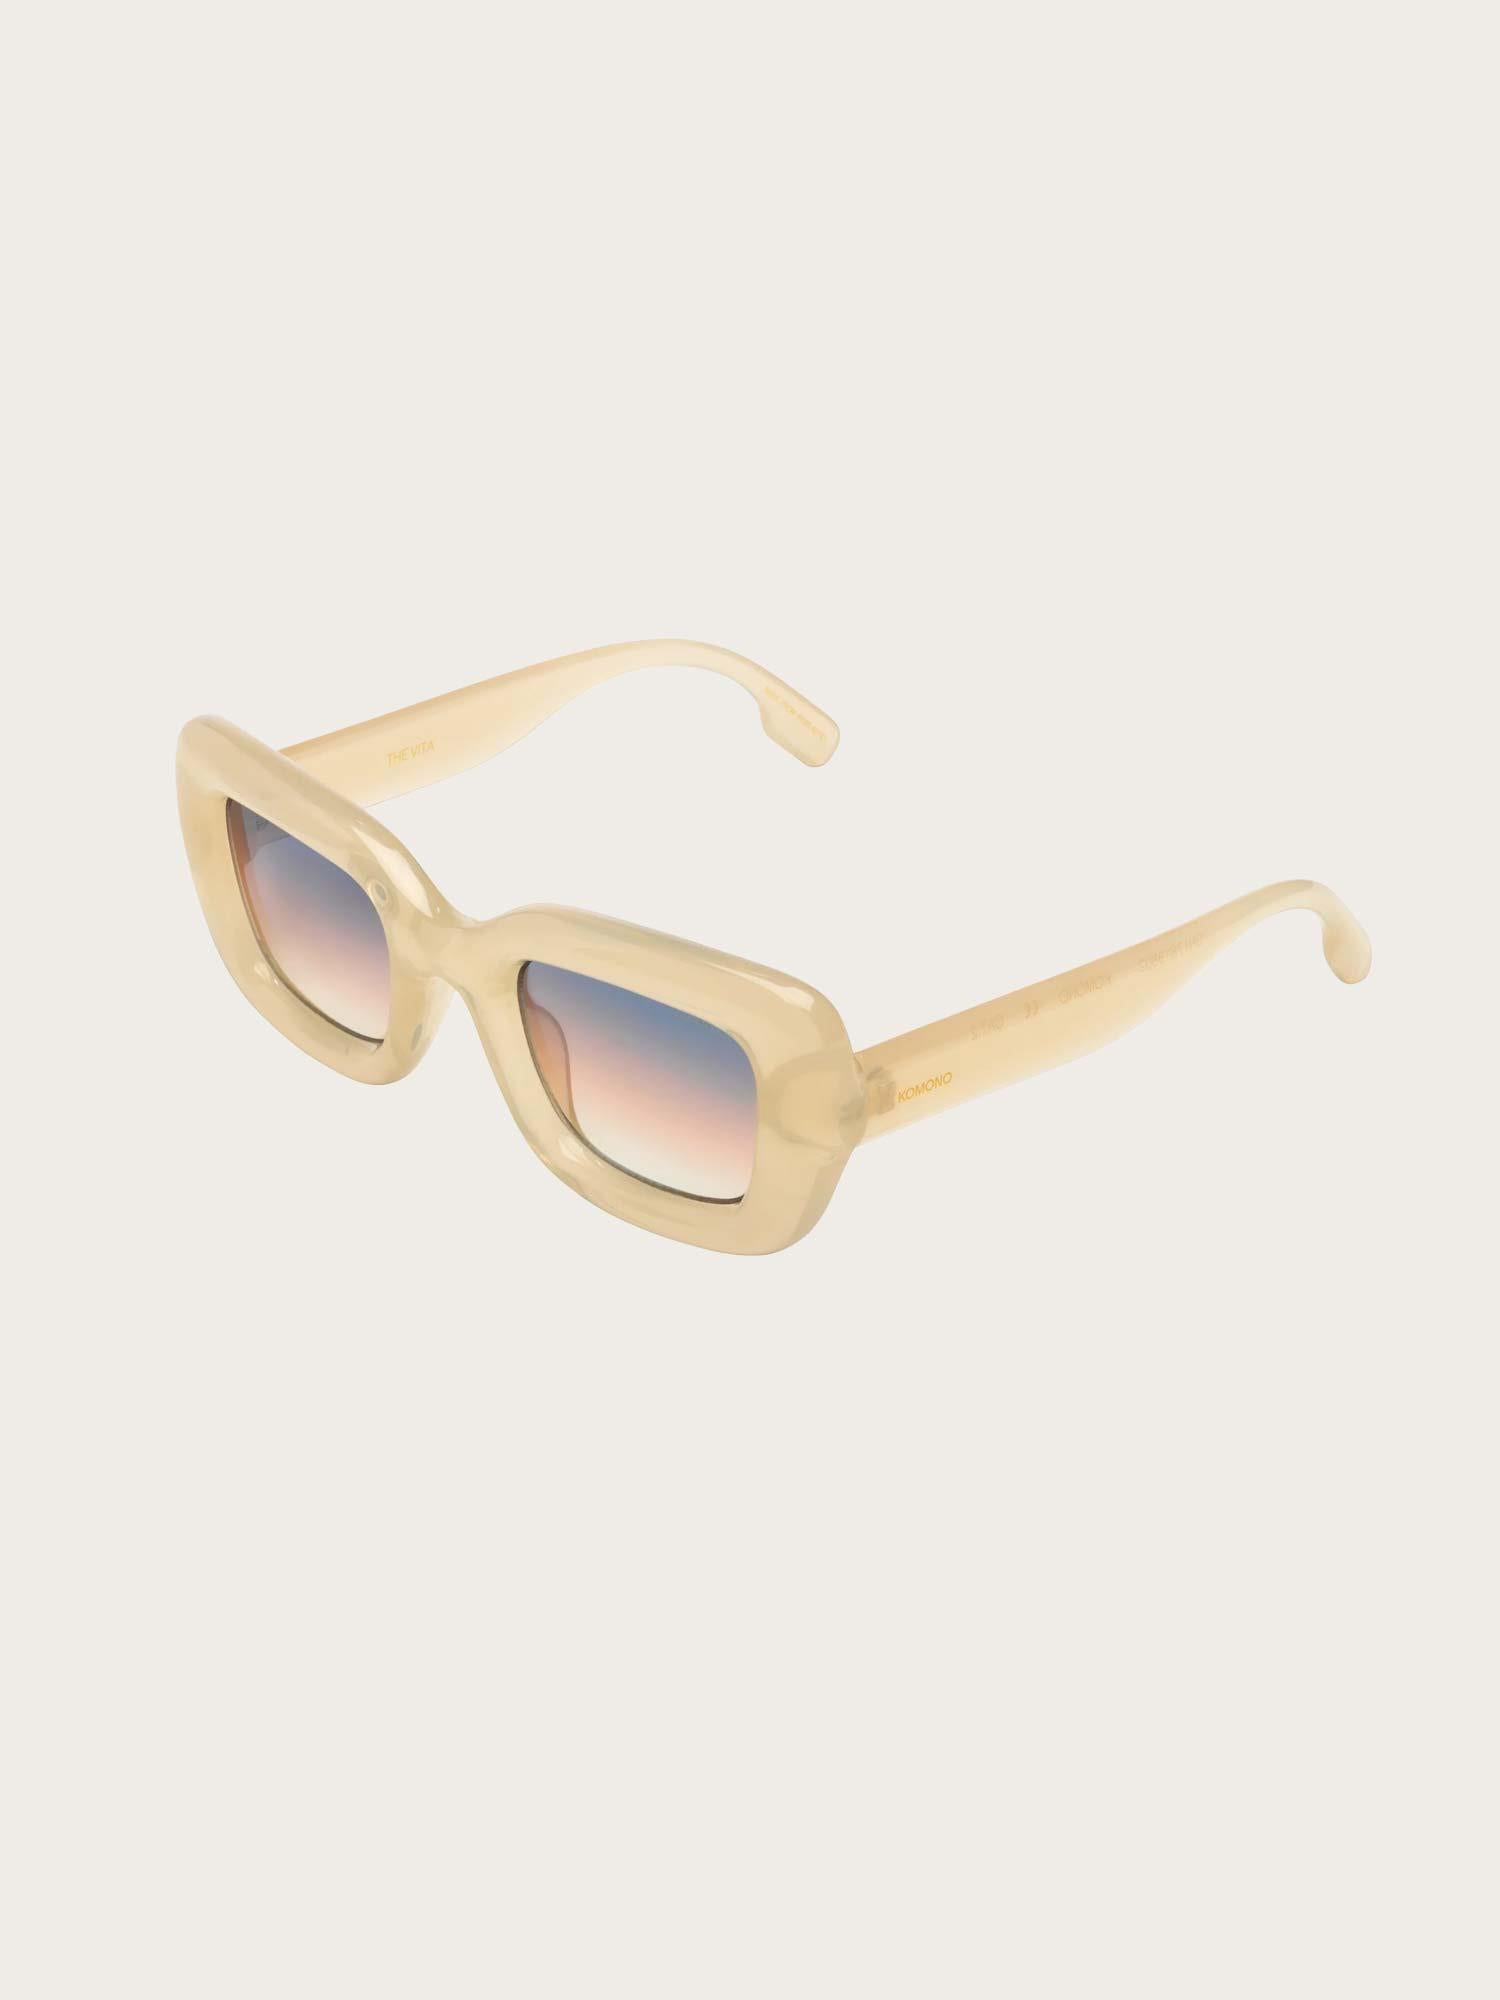 Vita Sunglasses - Daffodil